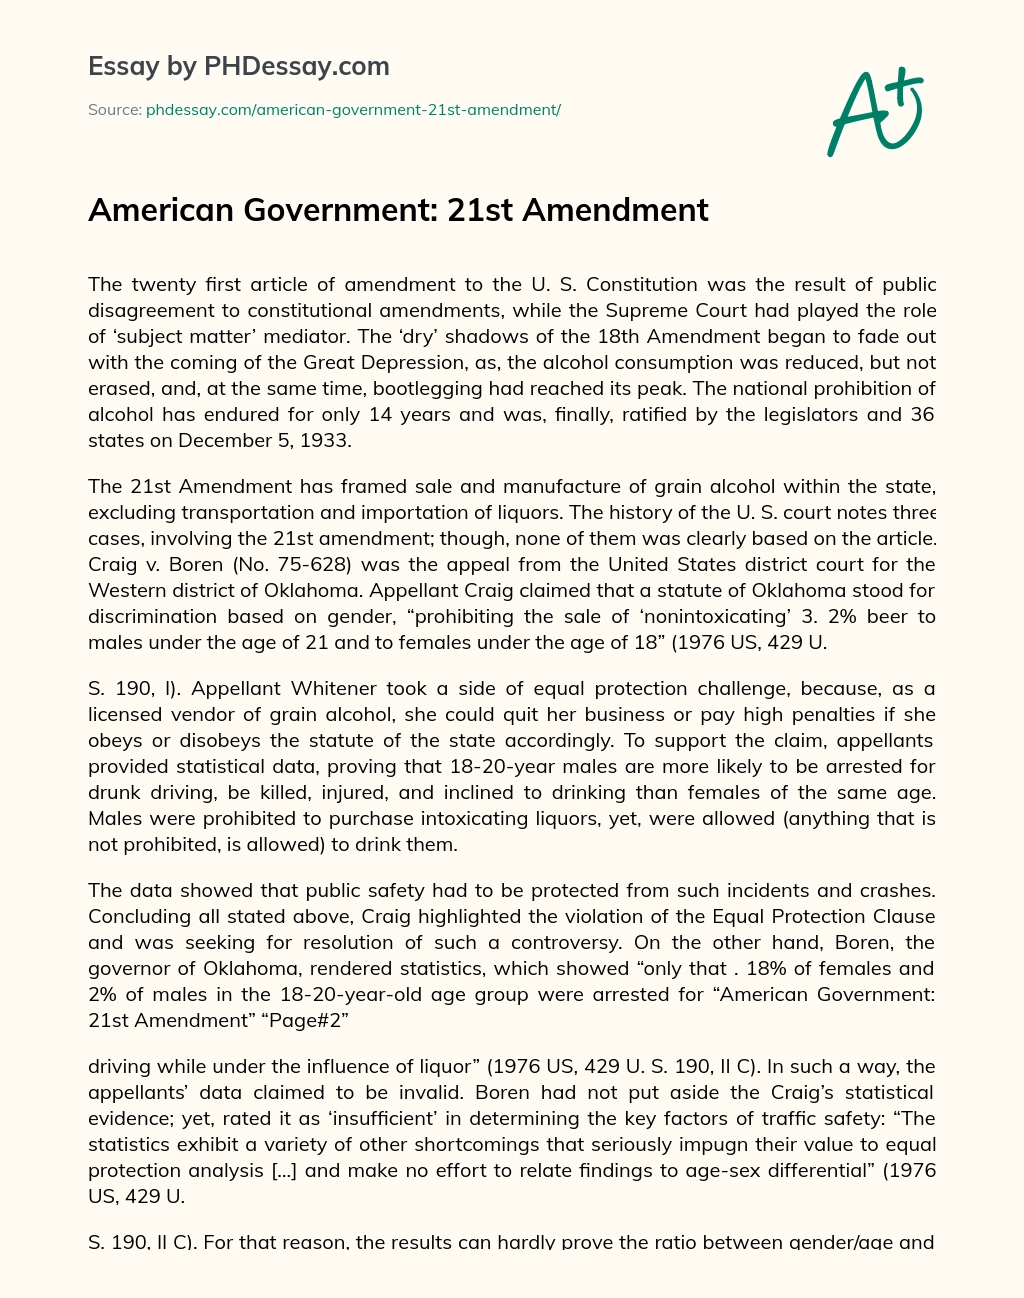 American Government: 21st Amendment essay